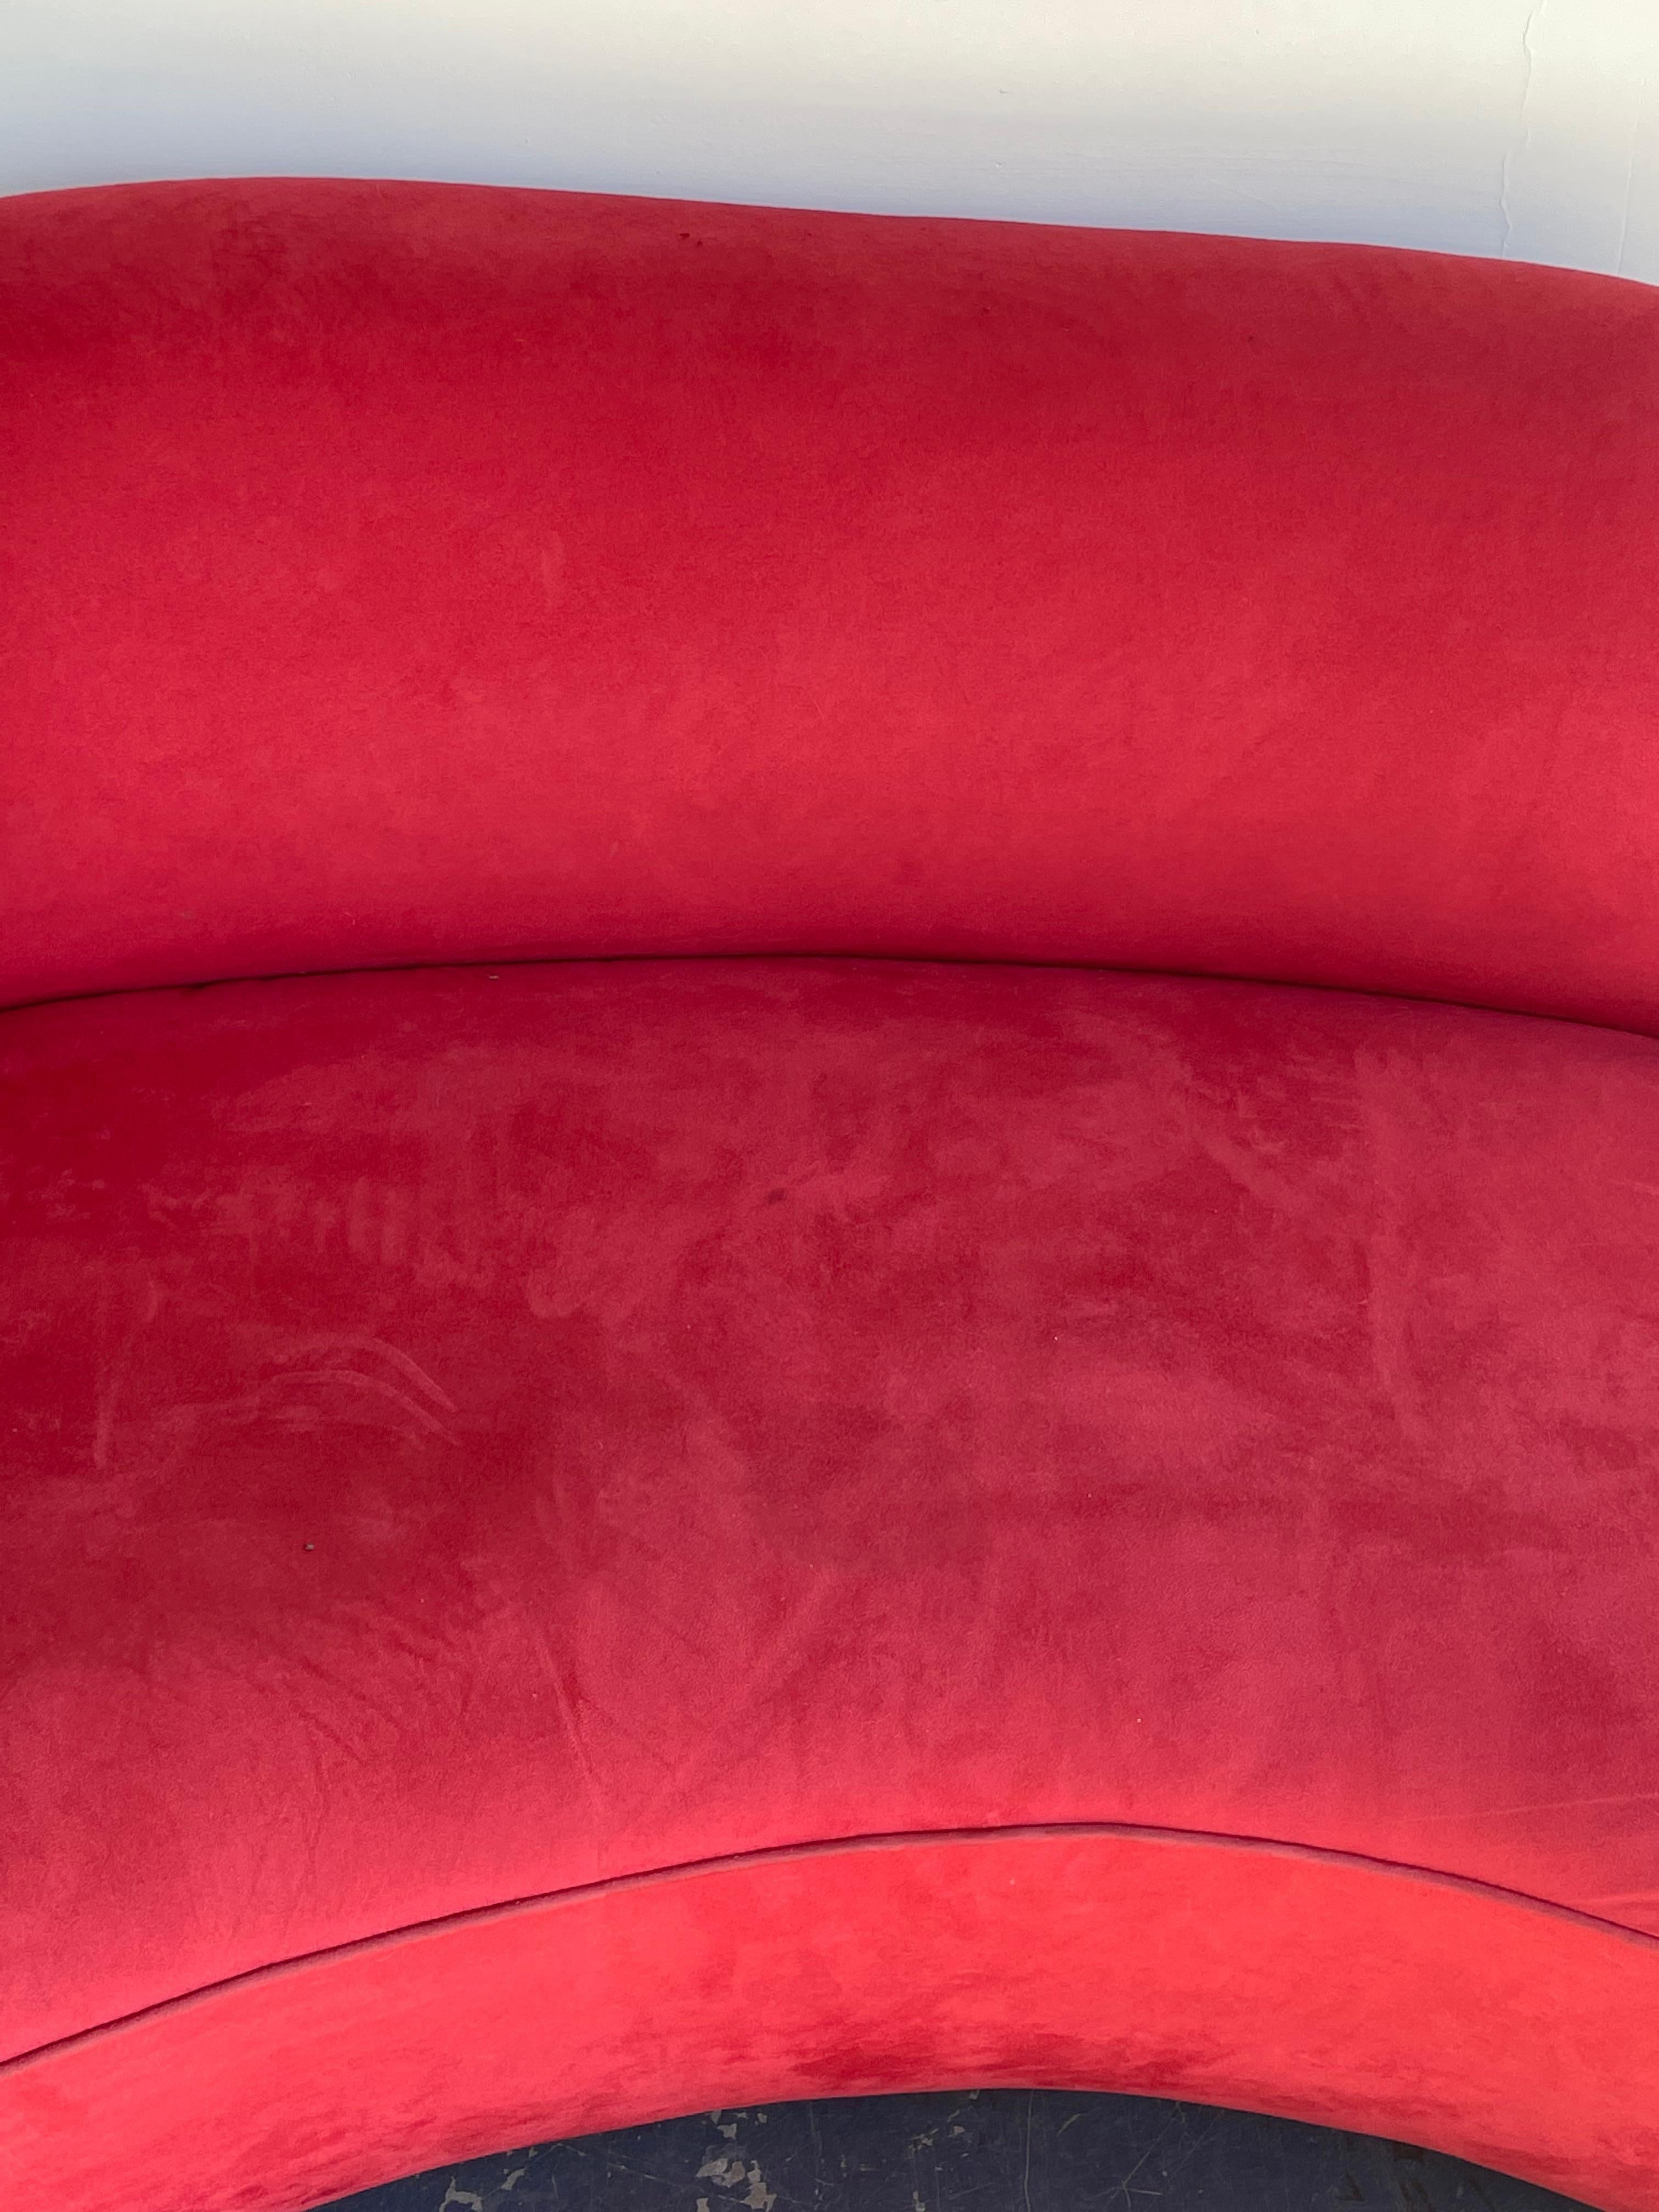 Contemporary Vladimir Kagan “Zoe” Organic Freeform Sofa for American Leather